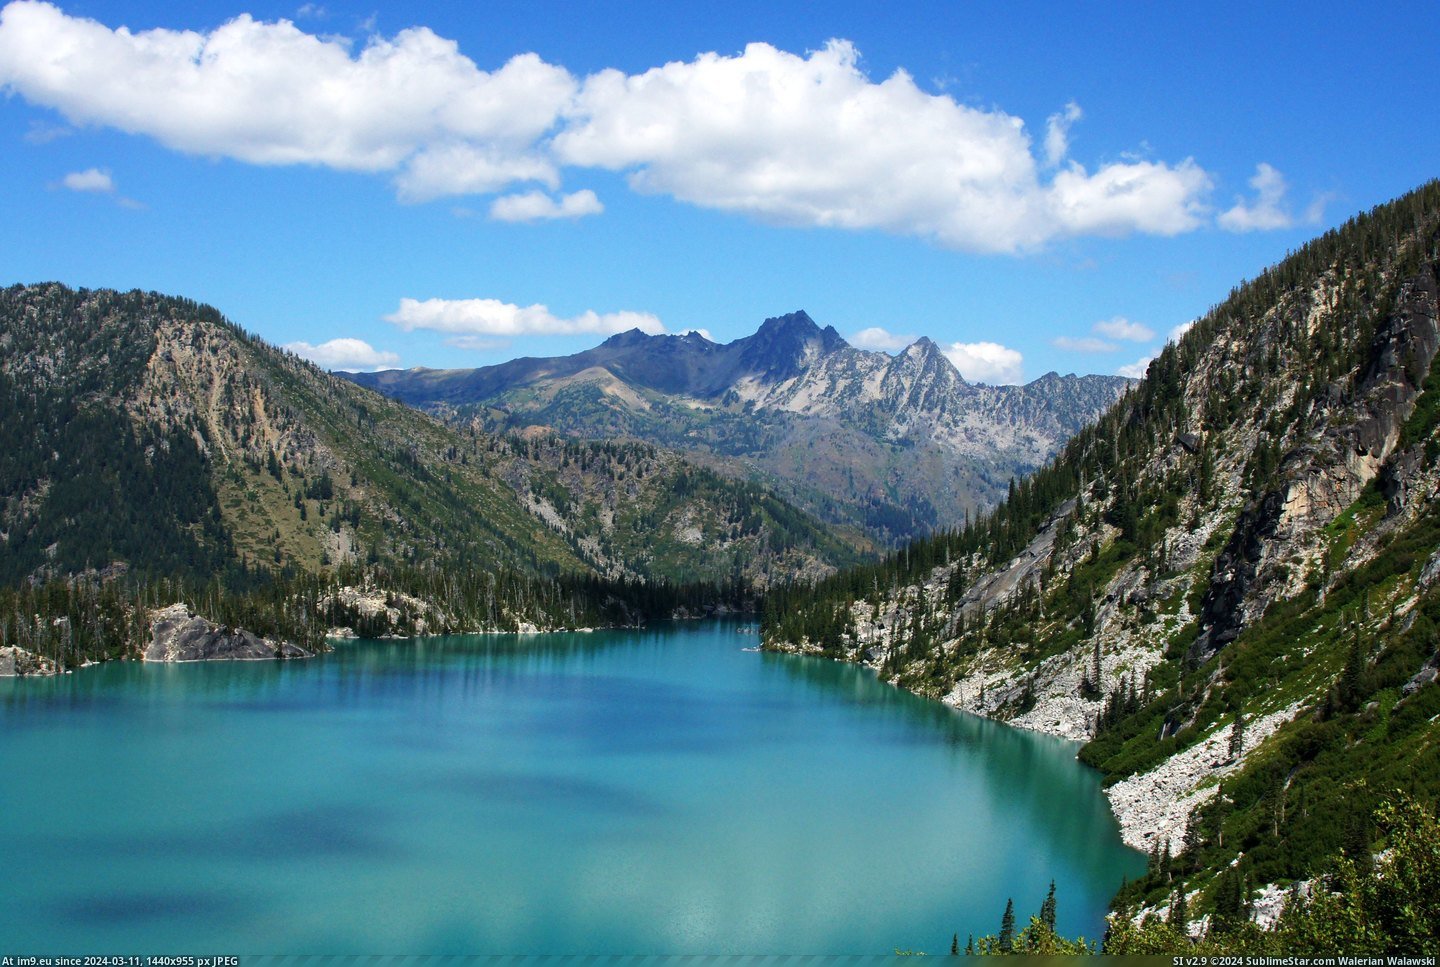 #Lake #Washington #Leavenworth #Colchuck #Waters #Turquoise [Earthporn] The turquoise waters of Colchuck Lake, near Leavenworth Washington [4592x3056] [oc] Pic. (Изображение из альбом My r/EARTHPORN favs))